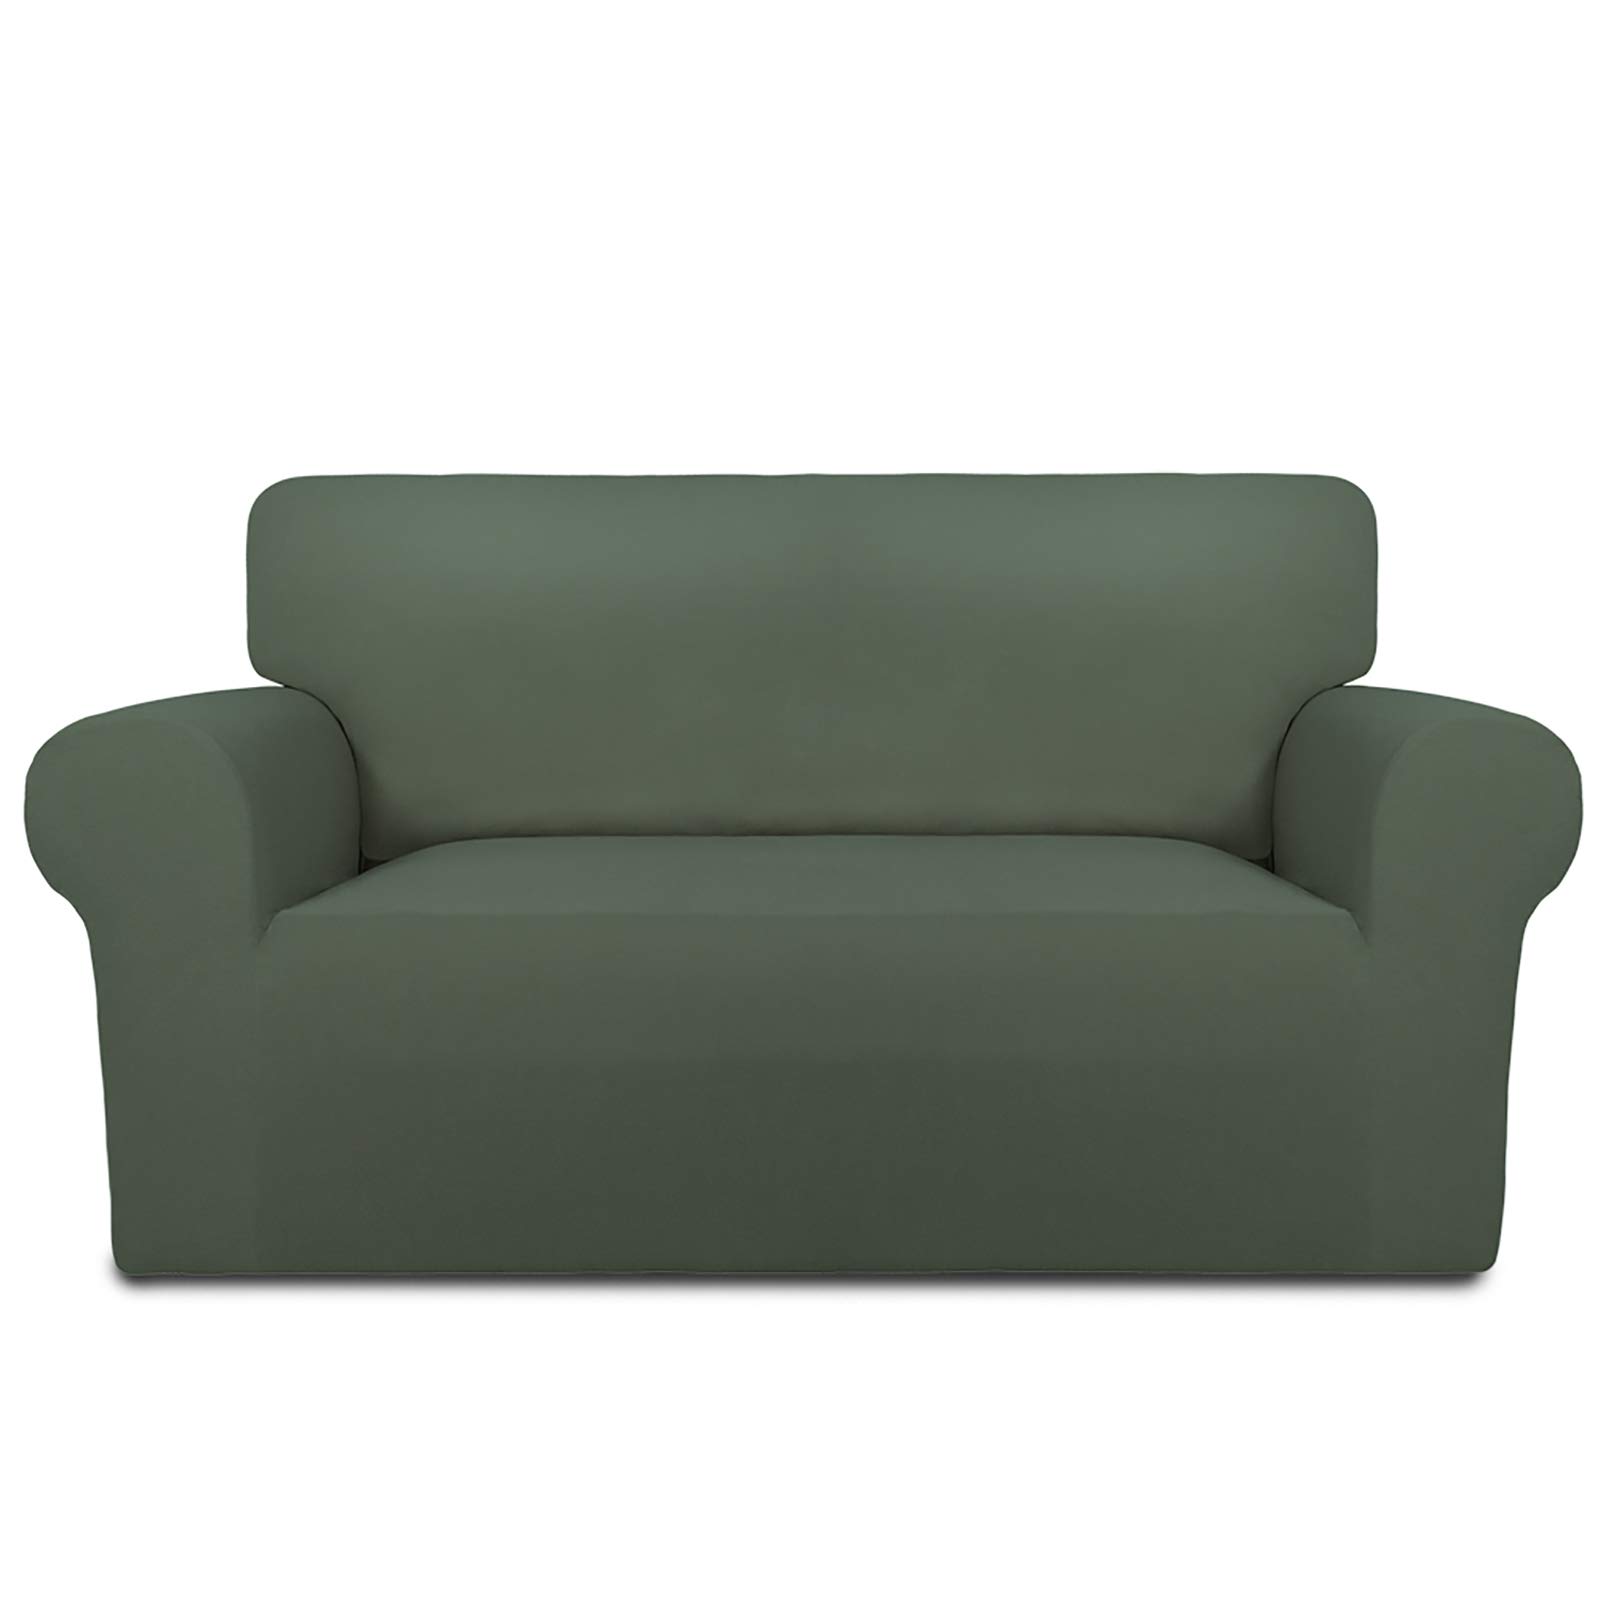 PureFit Super Stretch chair Sofa Slipcover - Spandex Non Slip Soft couch Sofa cover, Washable Furniture Protector with Non Skid 